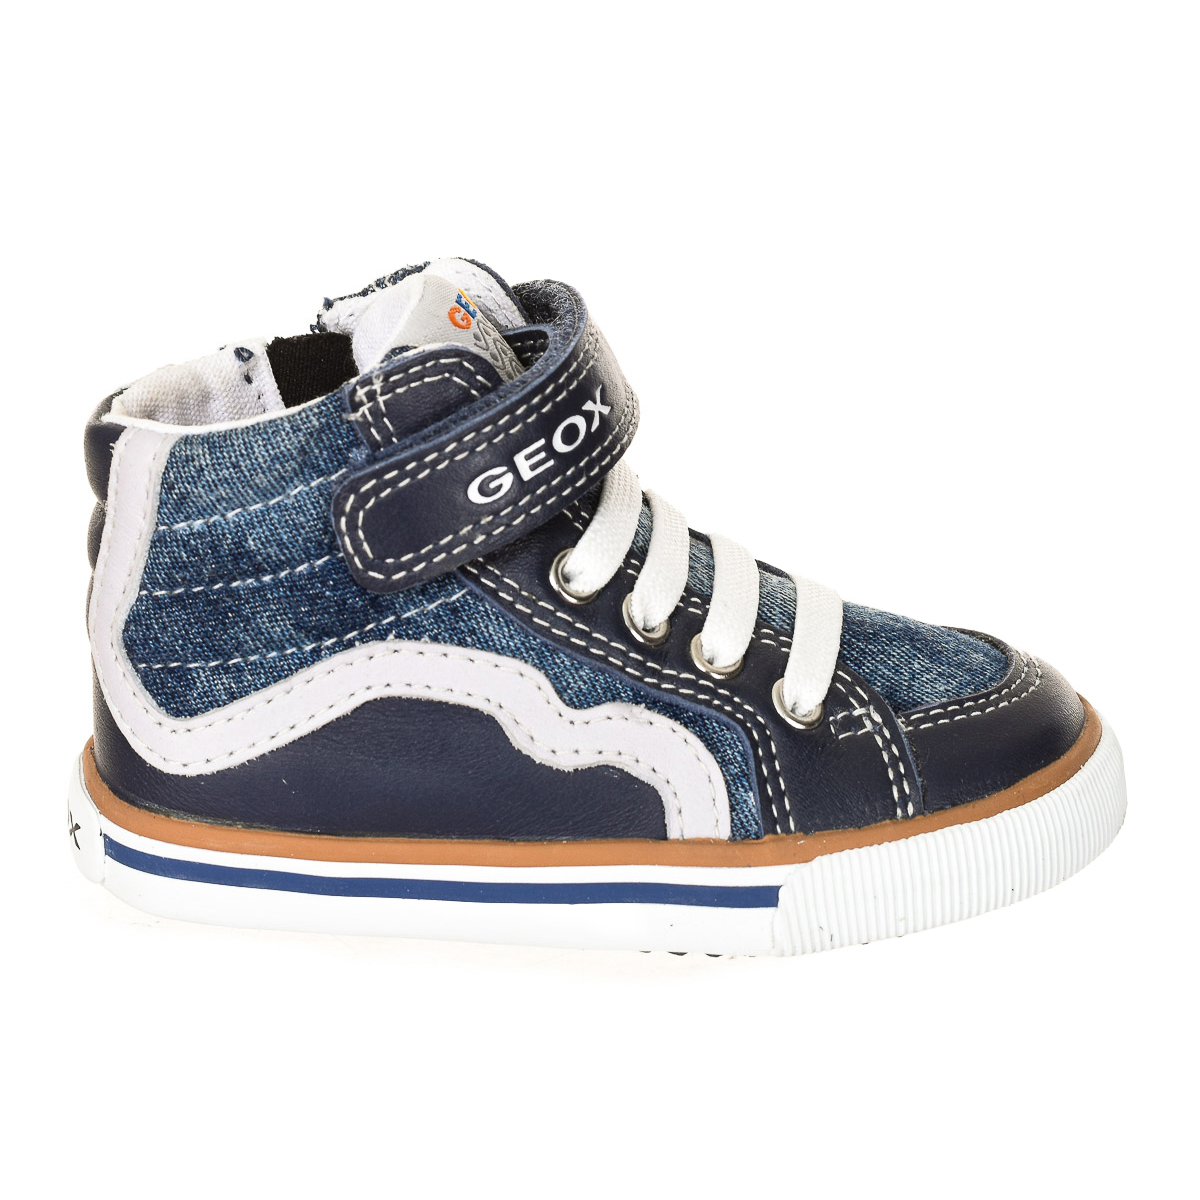 Sneaker Abotinado Geox B62a7c-01385 - azul-denim - 